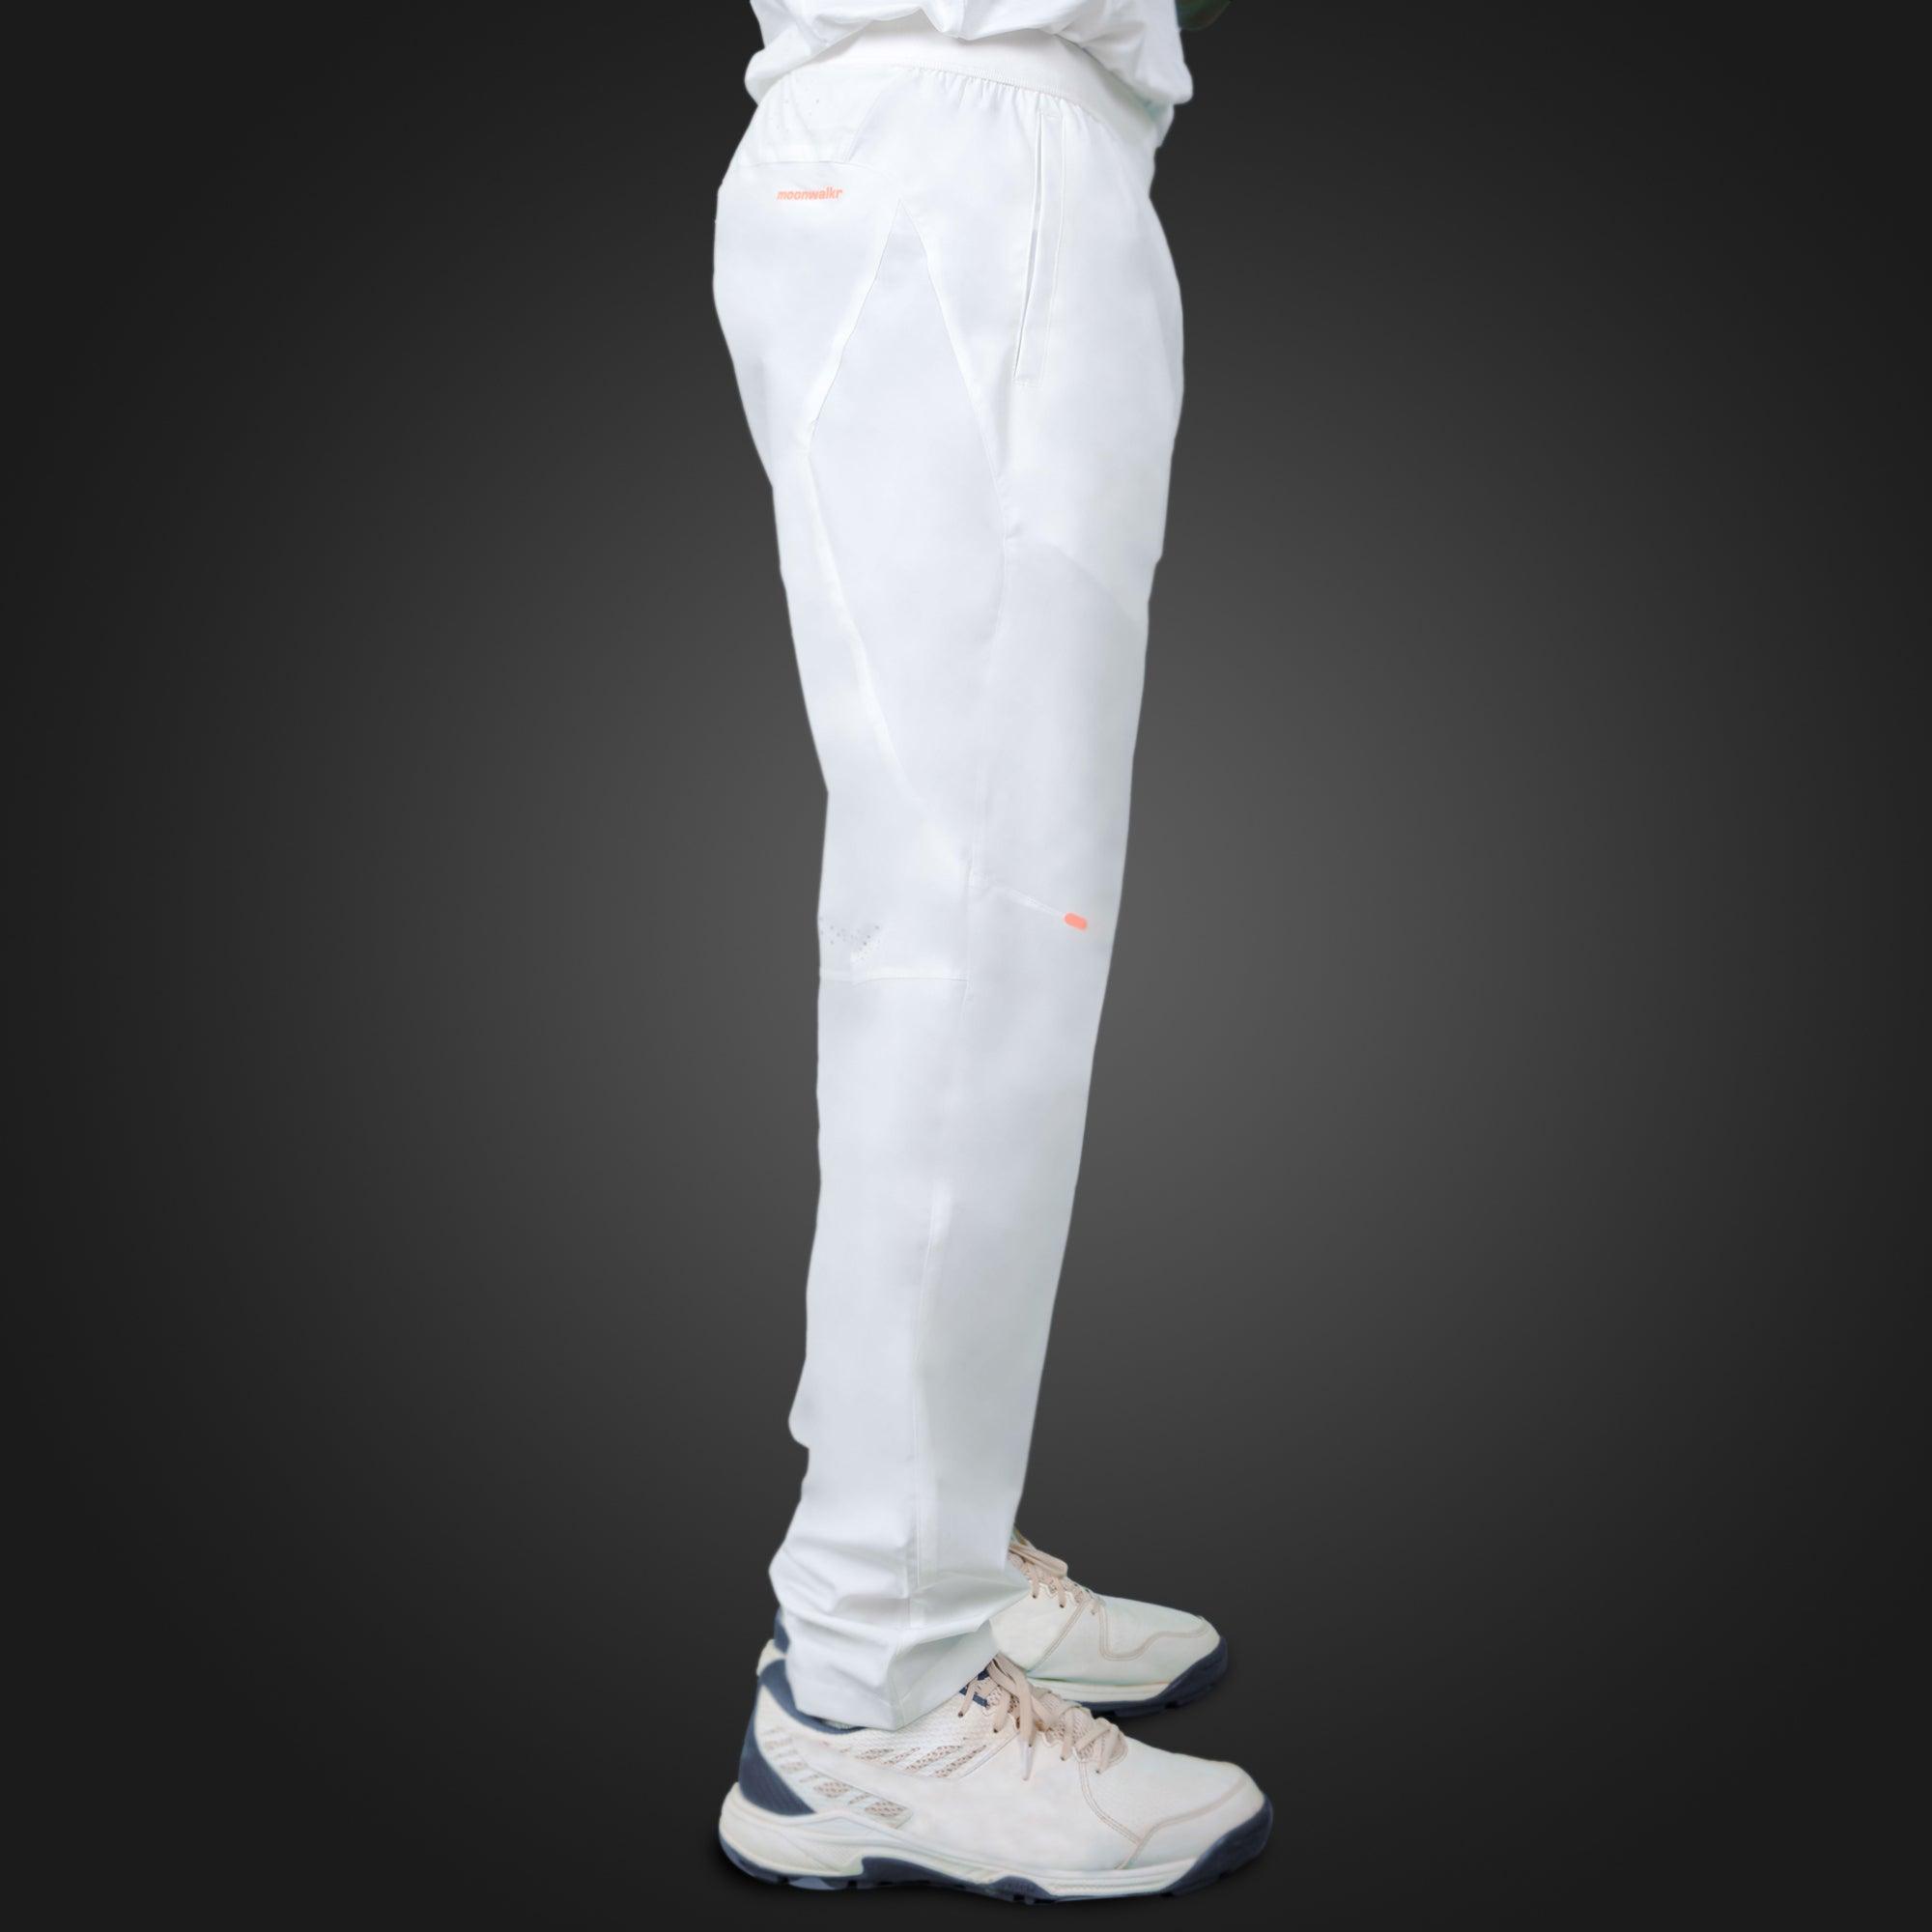 SG Professional Cricket Trouser (White/Blue Pocket Stripe) - Medium :  Amazon.in: Clothing & Accessories